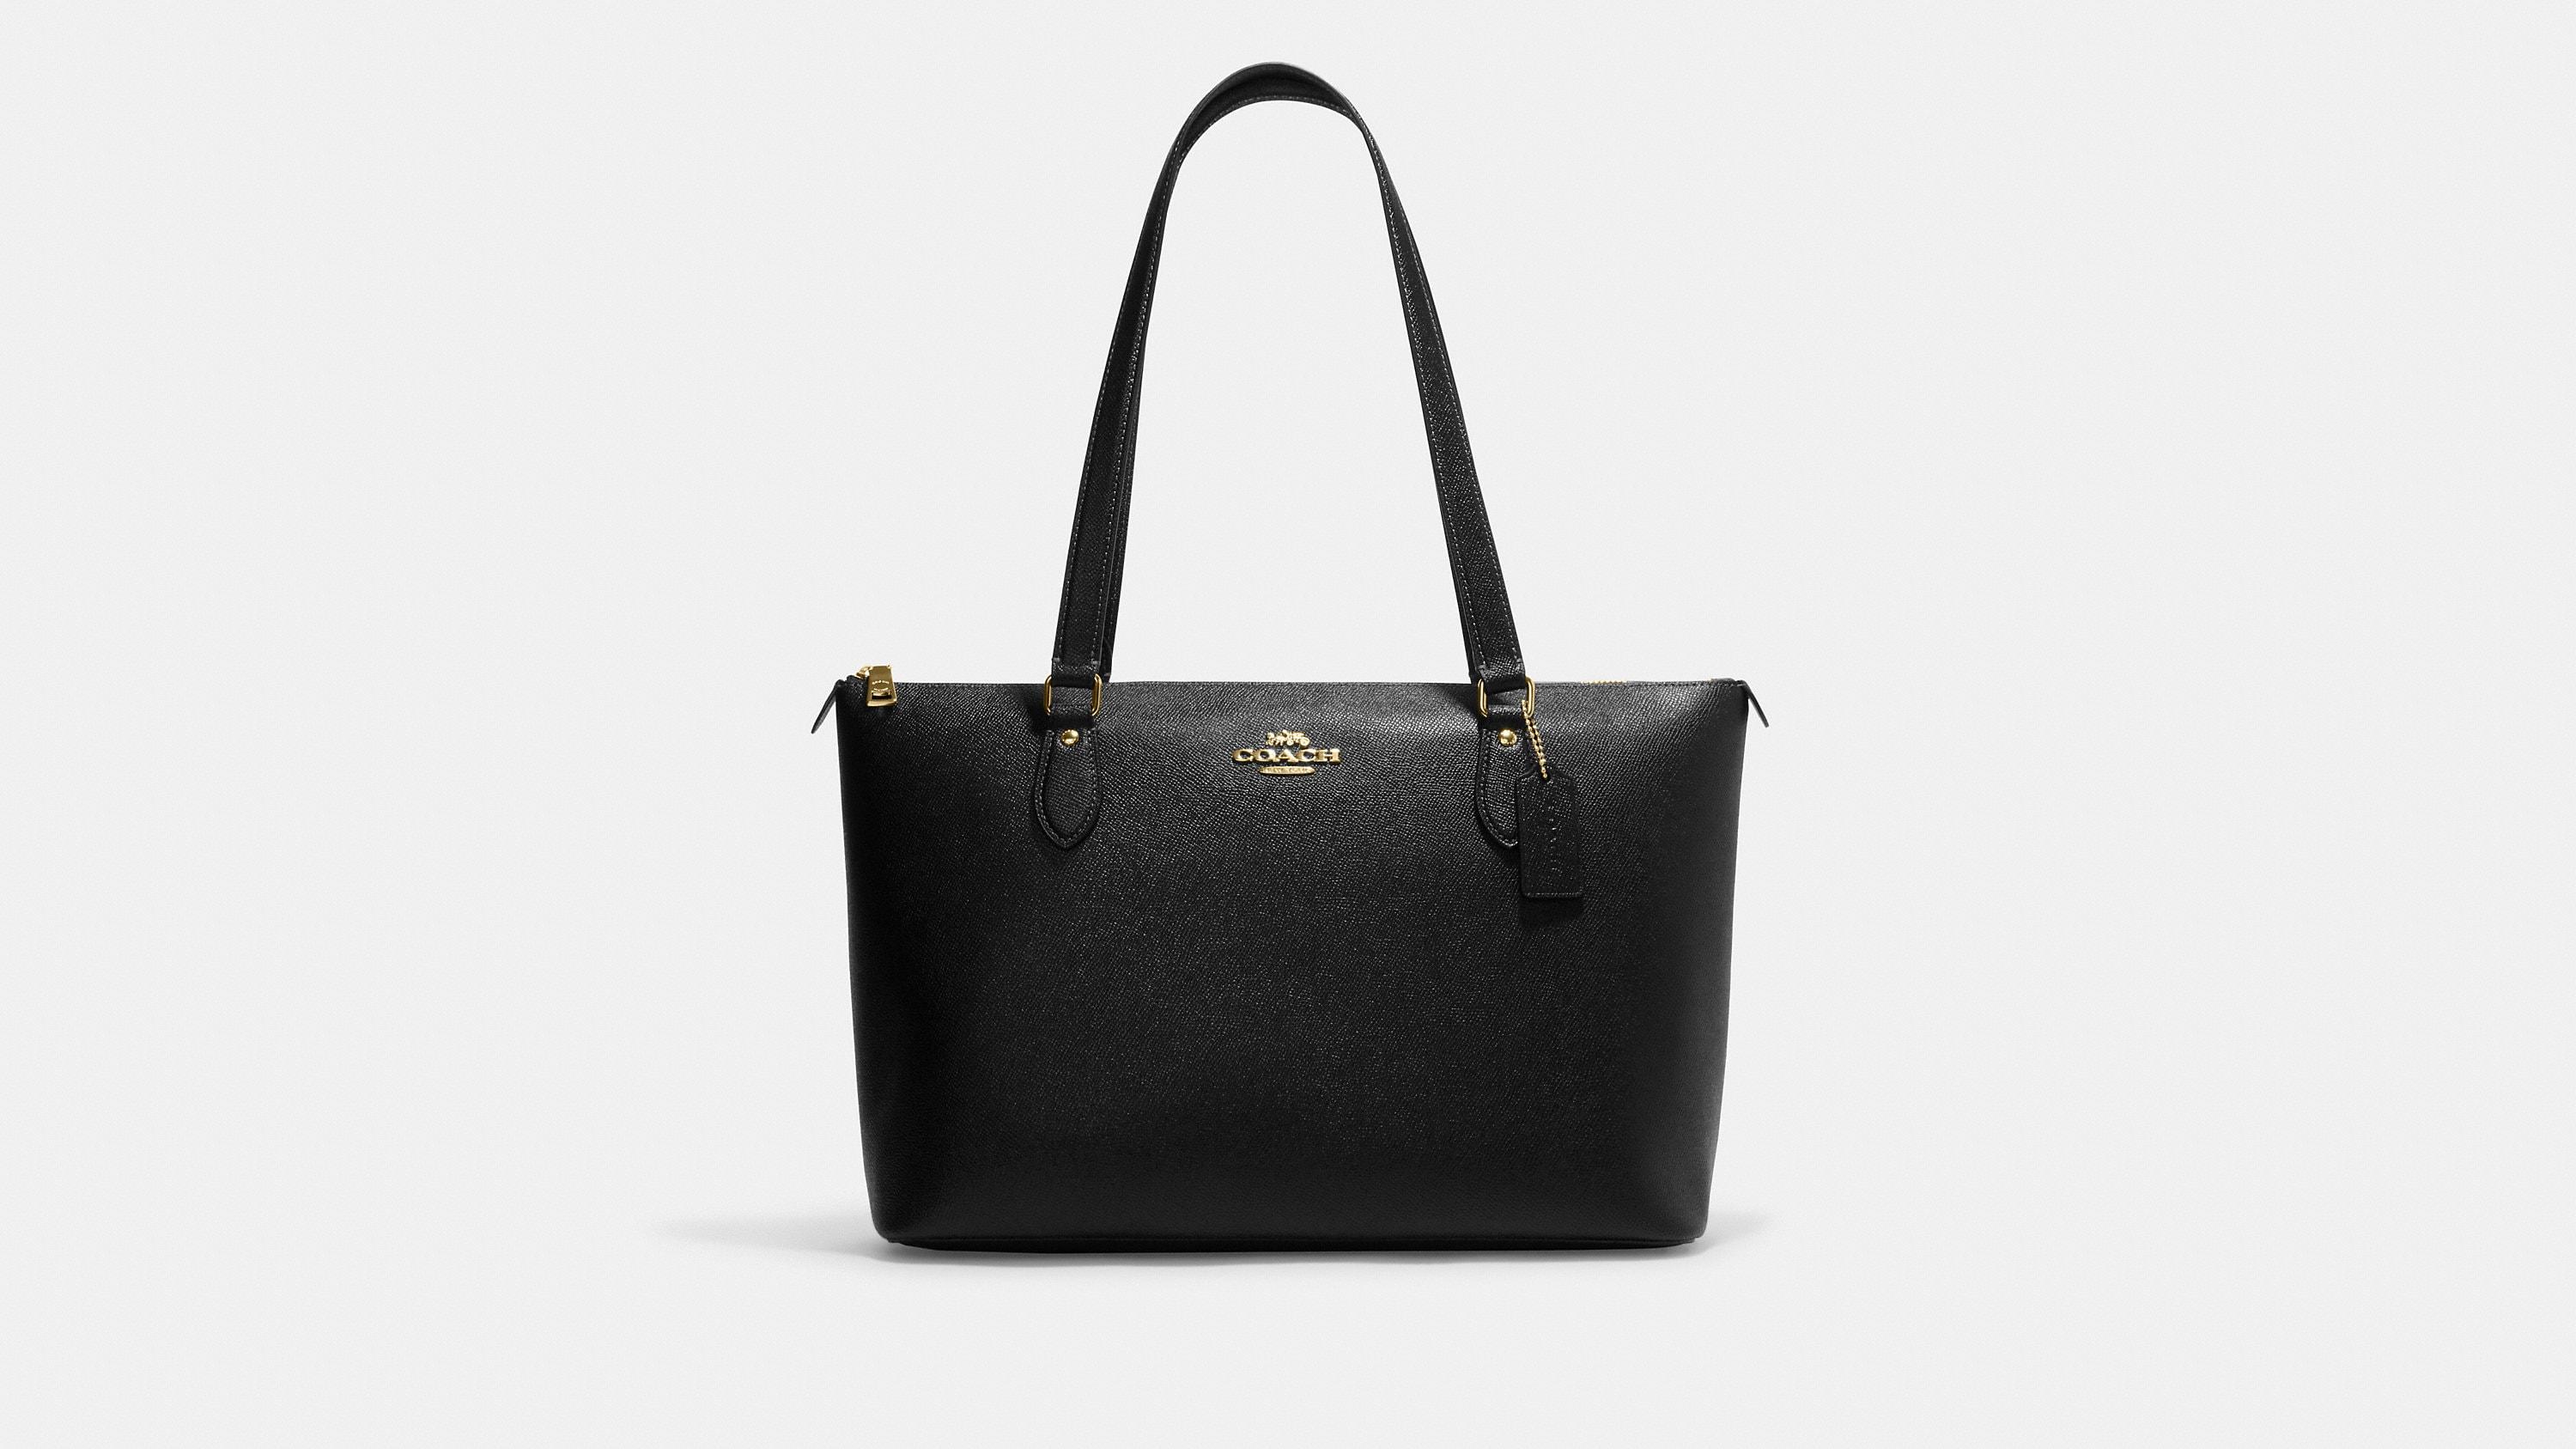 coach black leather tote bag